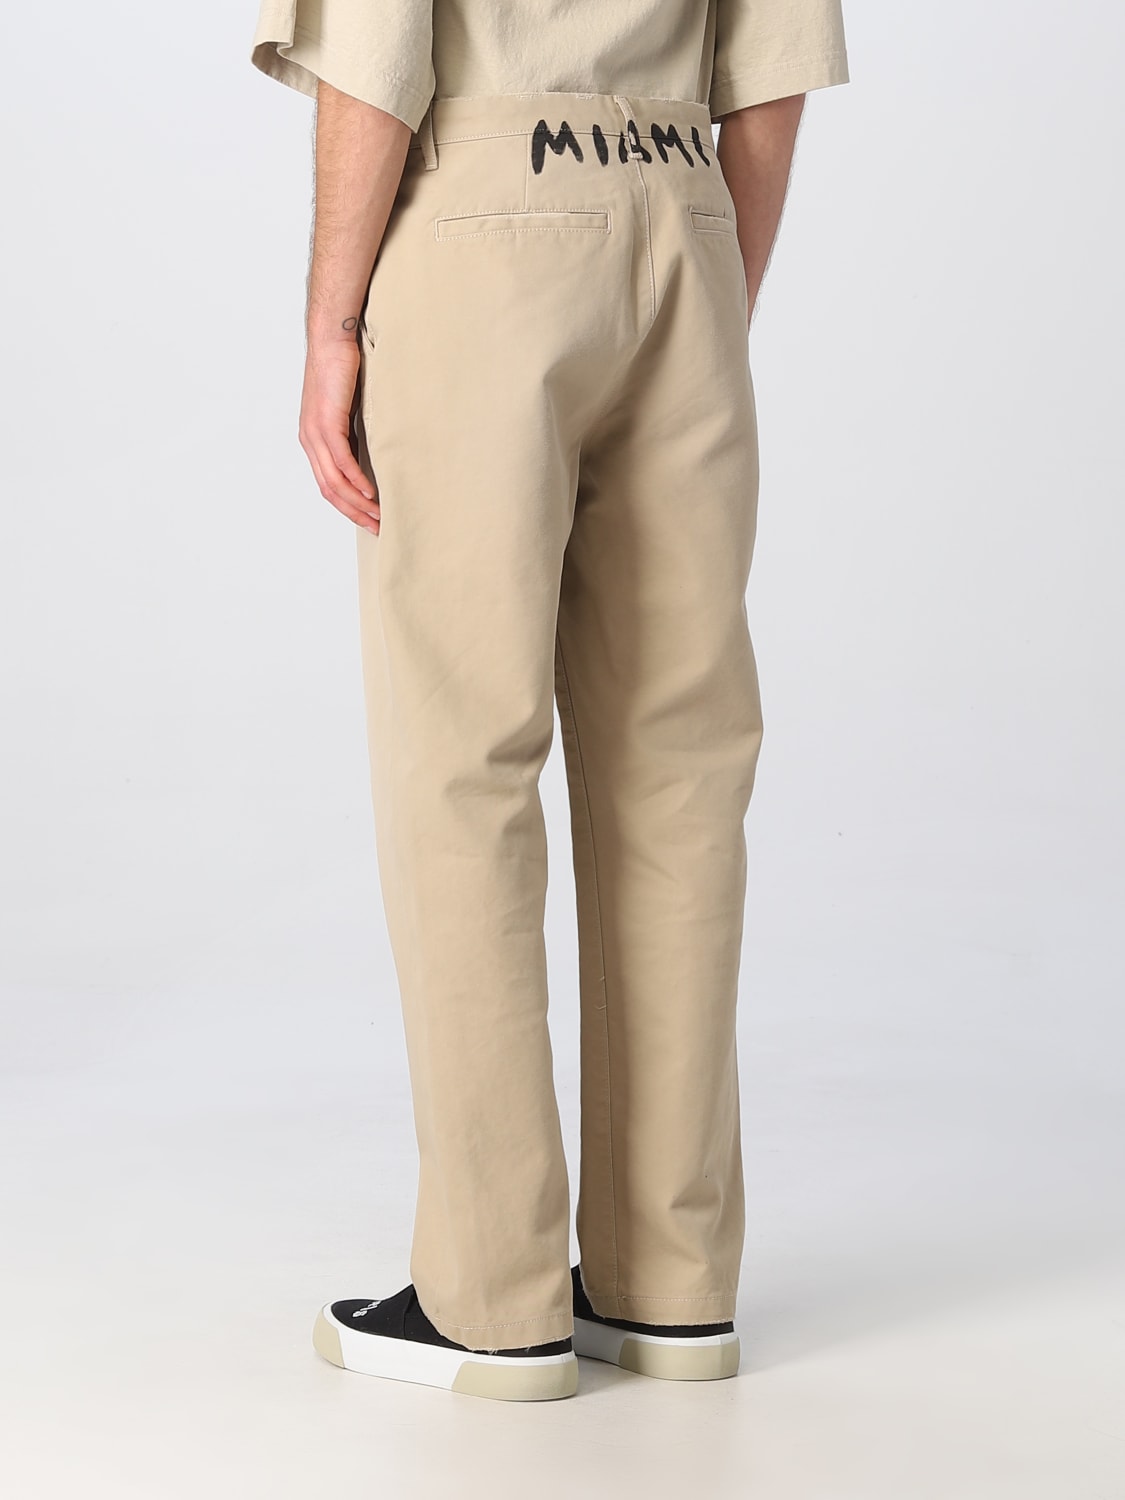 official outlet sale online Men's authentic Palm Angel fleece pants size  Small.